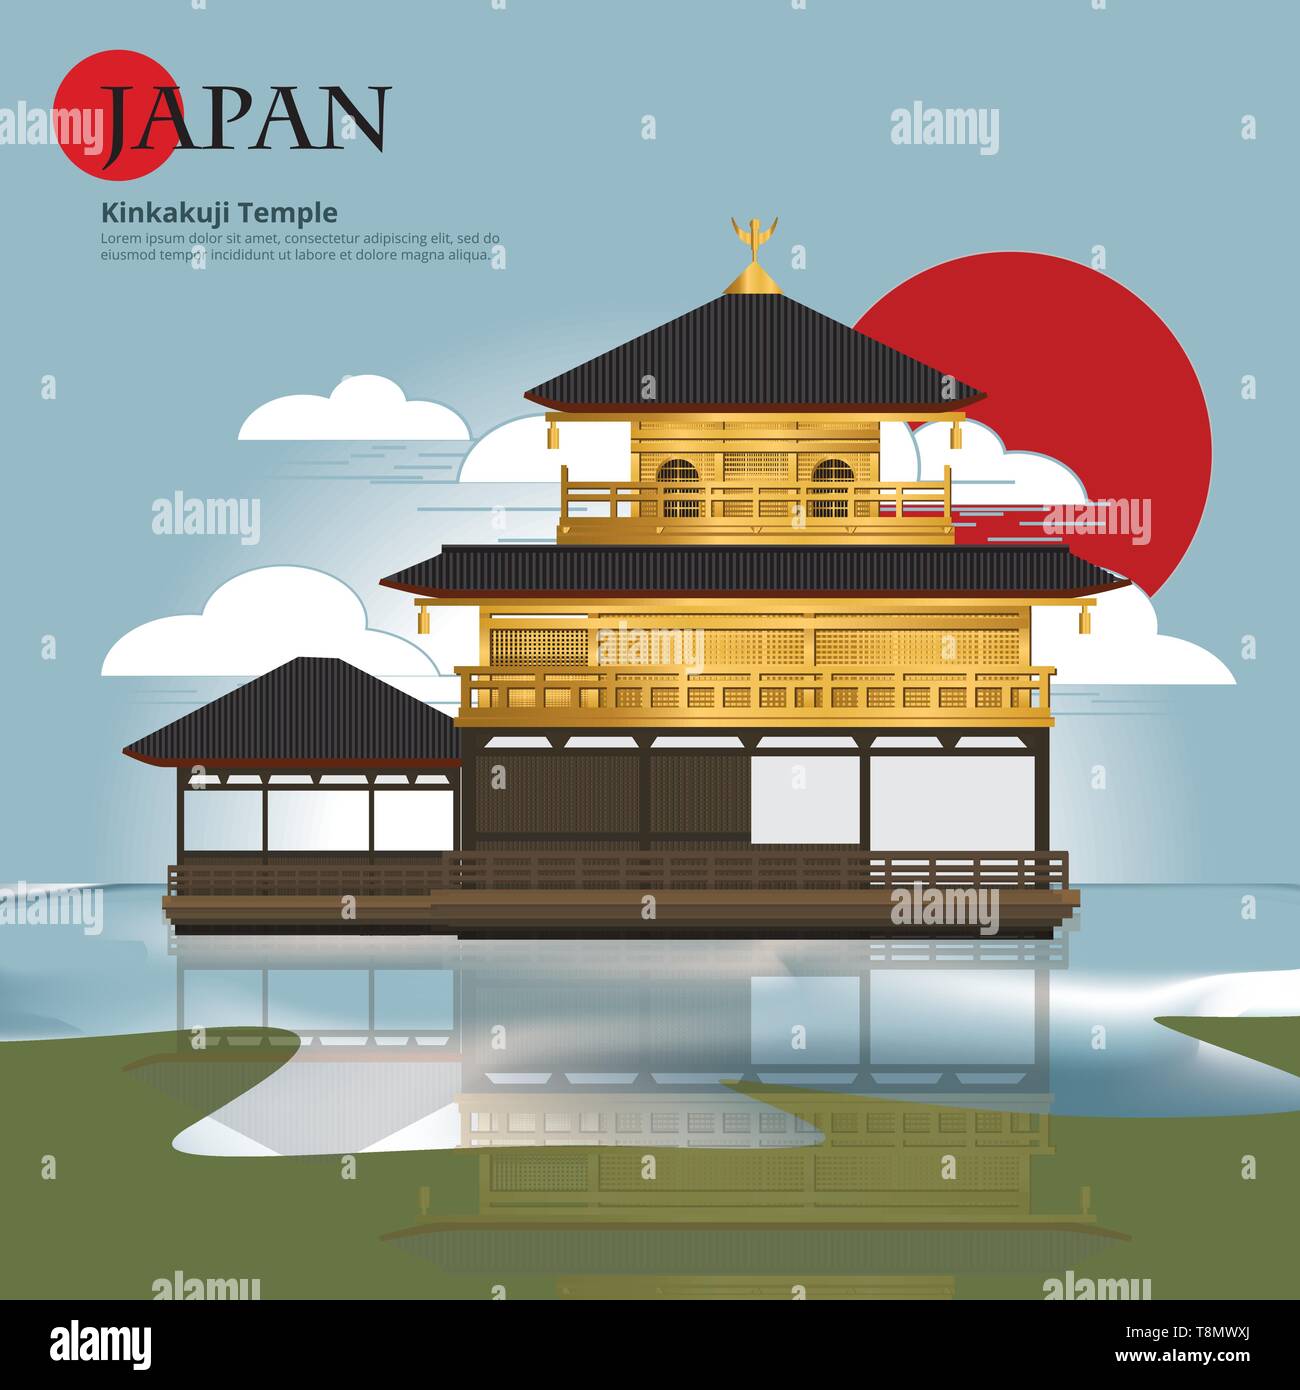 Kinkakuji Temple Japan Landmark and Travel Attractions Vector Illustration Stock Vector